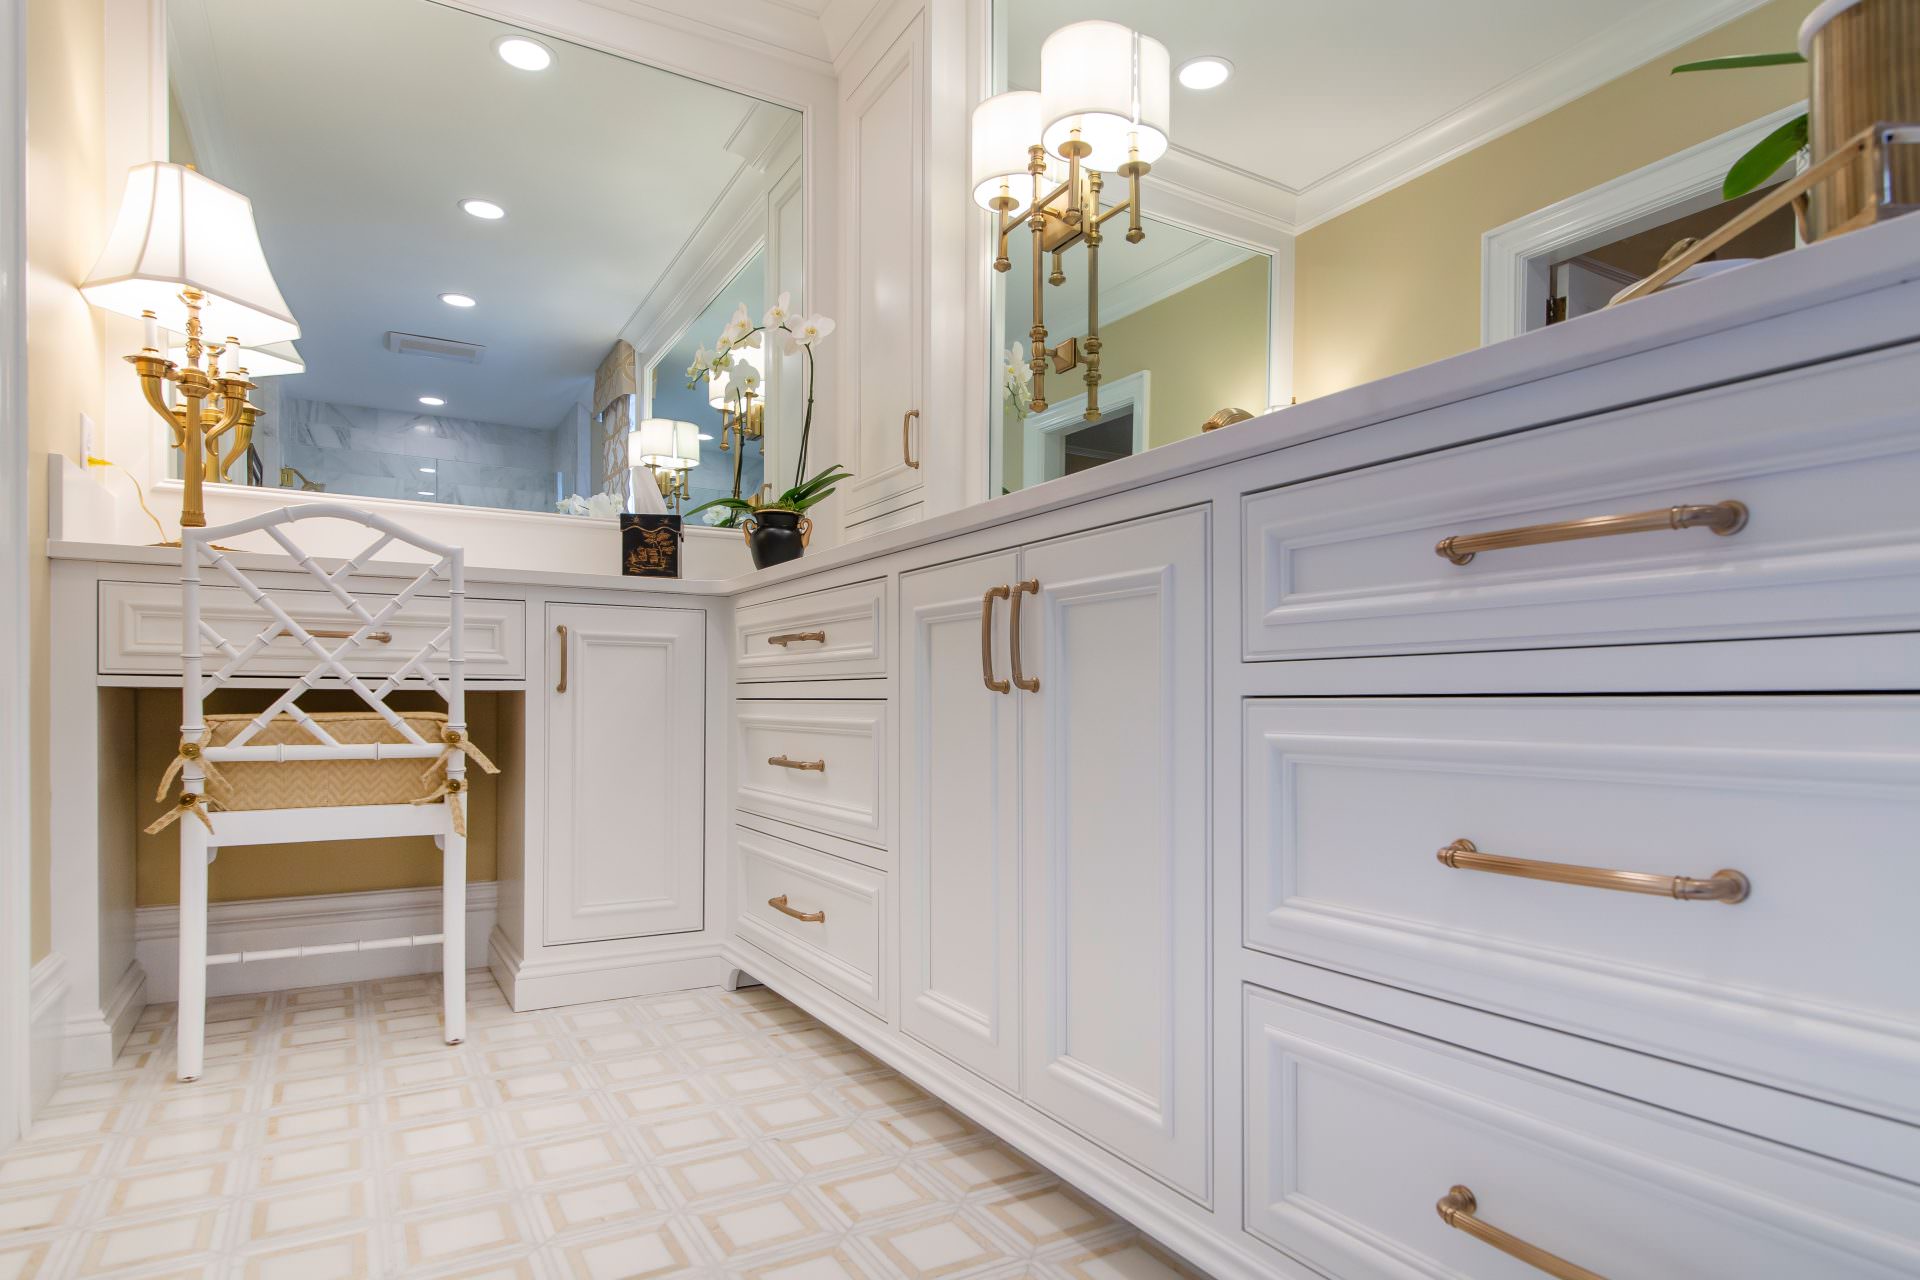 Kitchen Cabinet Or Bathroom Vanity